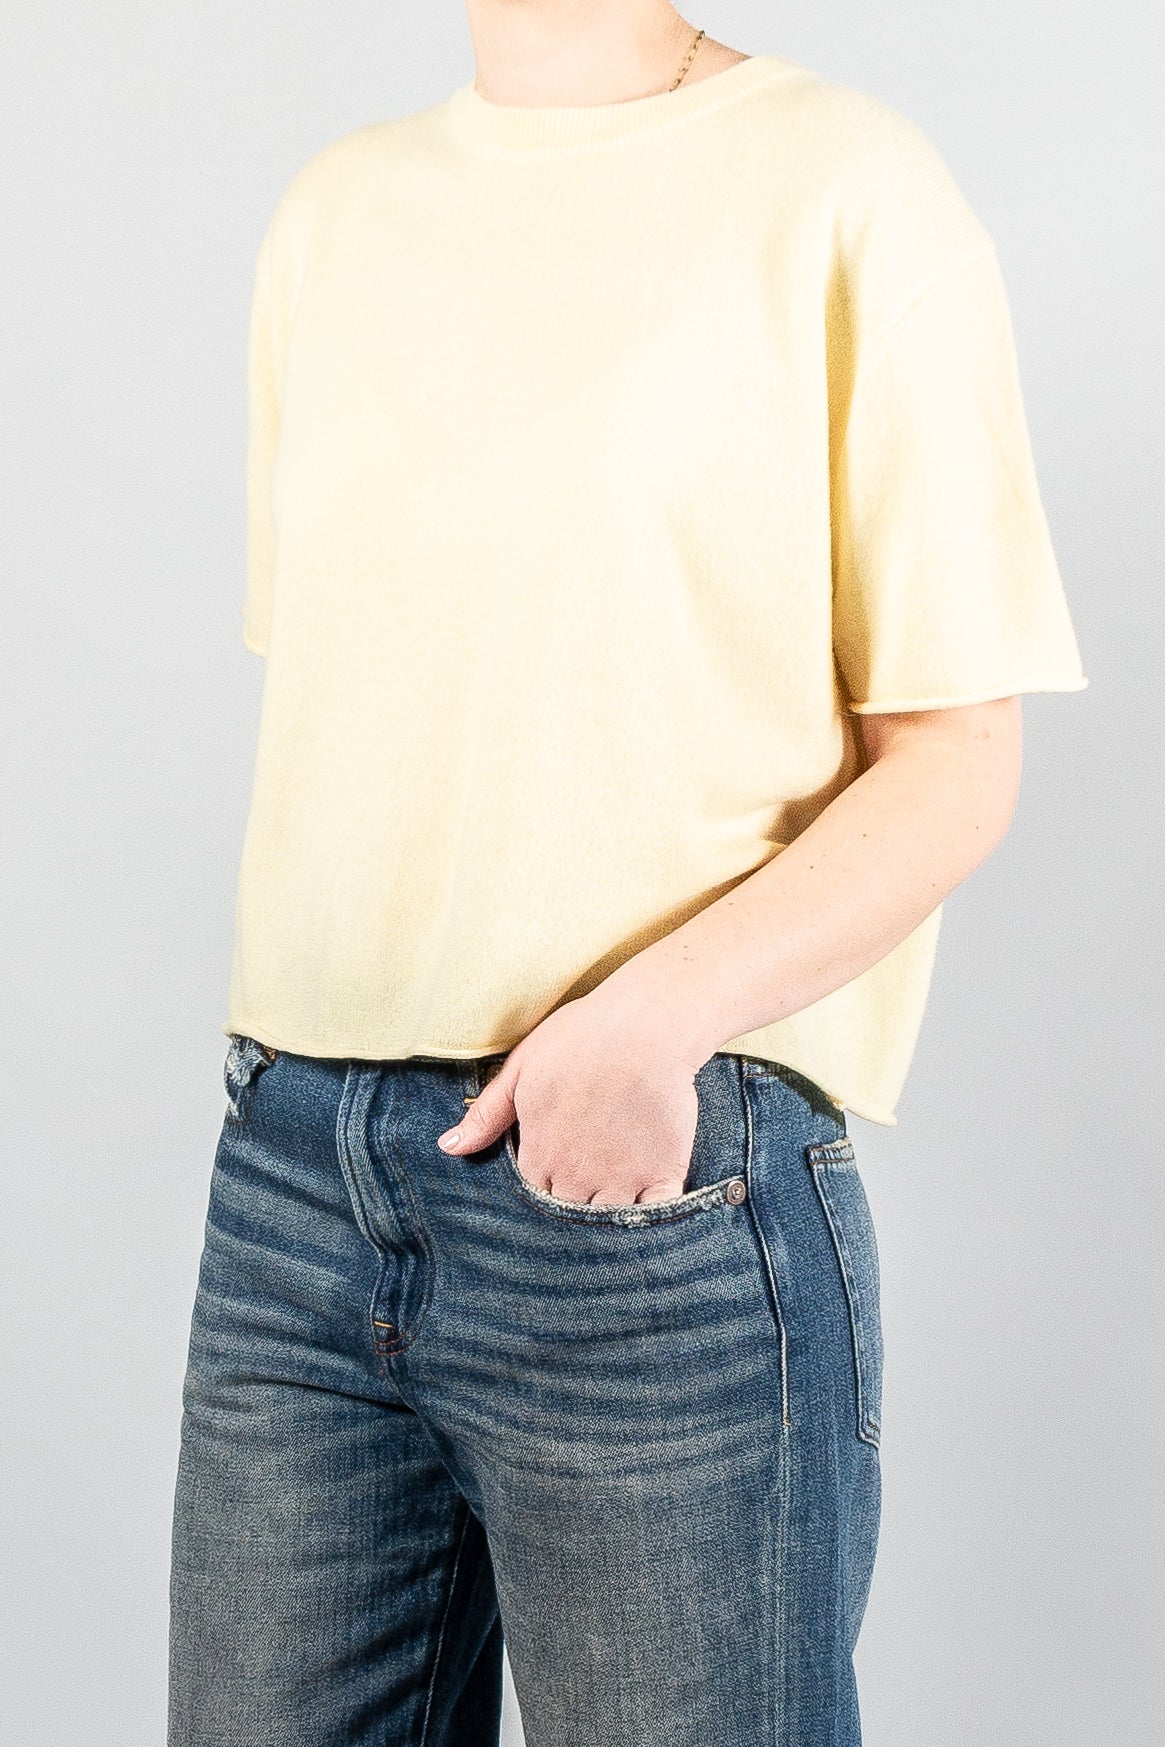 Lisa Yang Cila T-Shirt